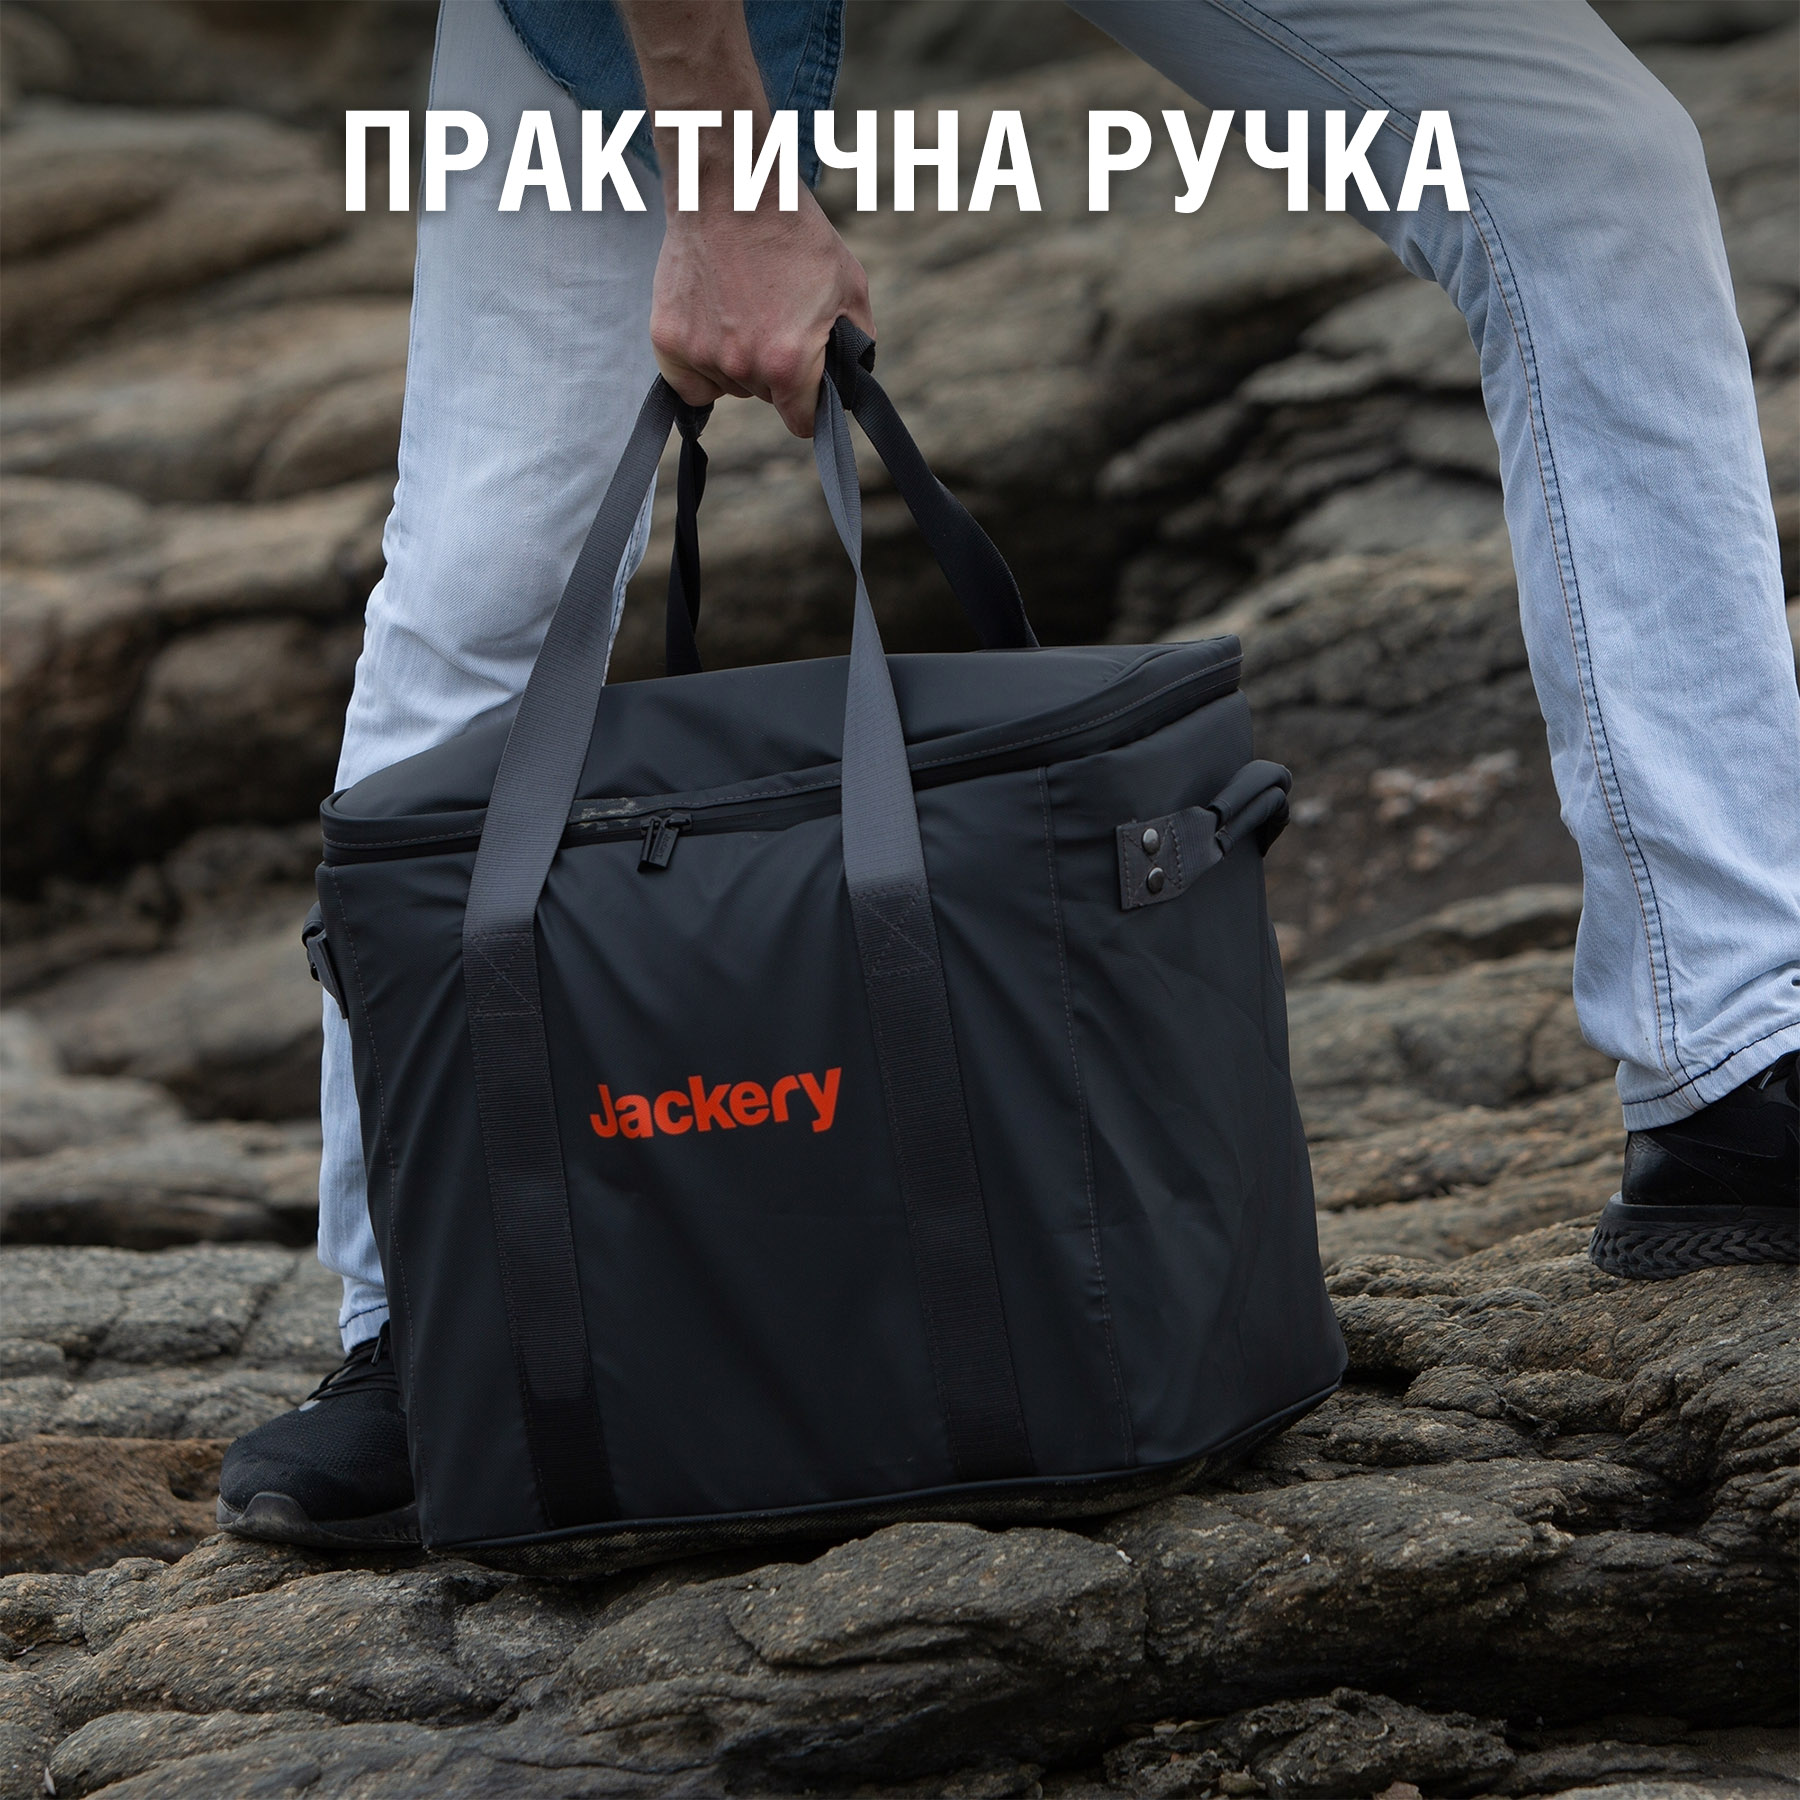 продаём Jackery Explorer 2000 Pro Bag  в Украине - фото 4